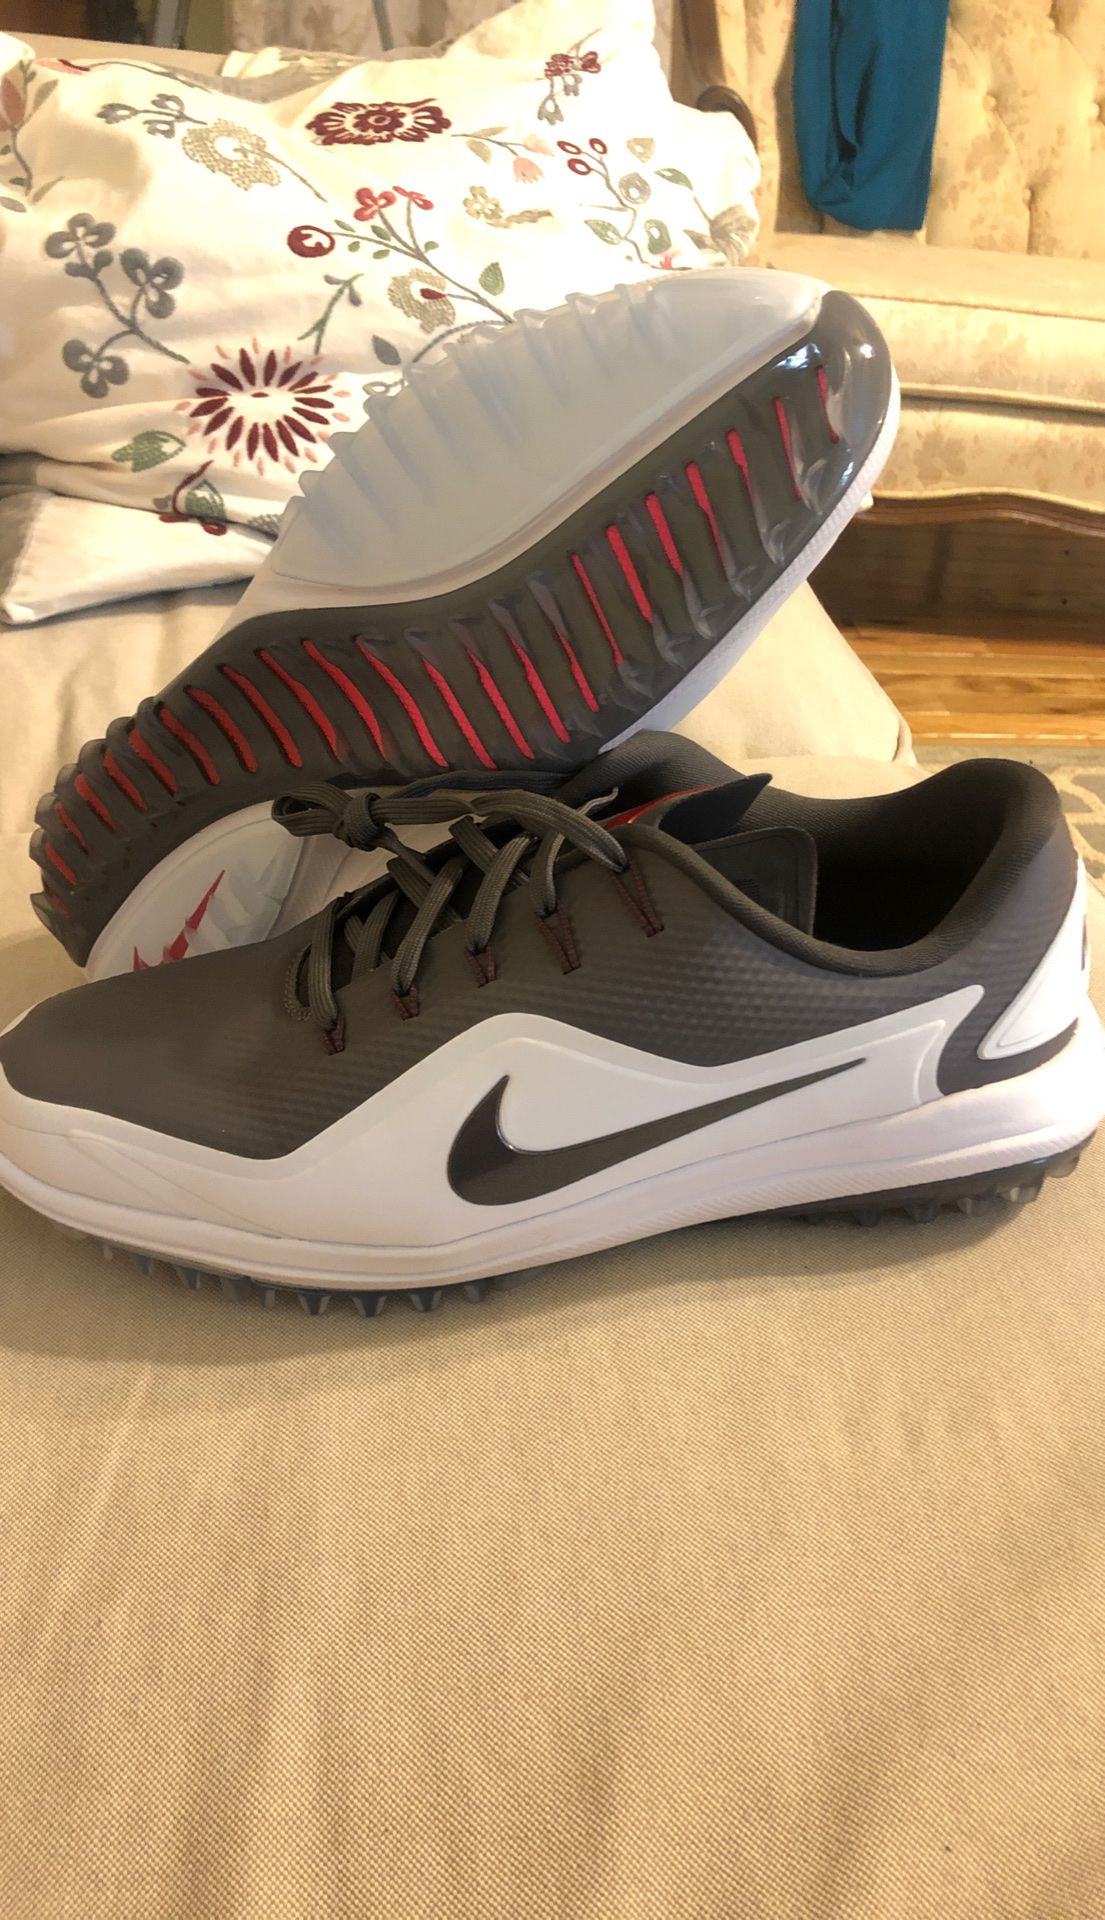 Nike lunar control vapor “gunsmoke“ golf shoes